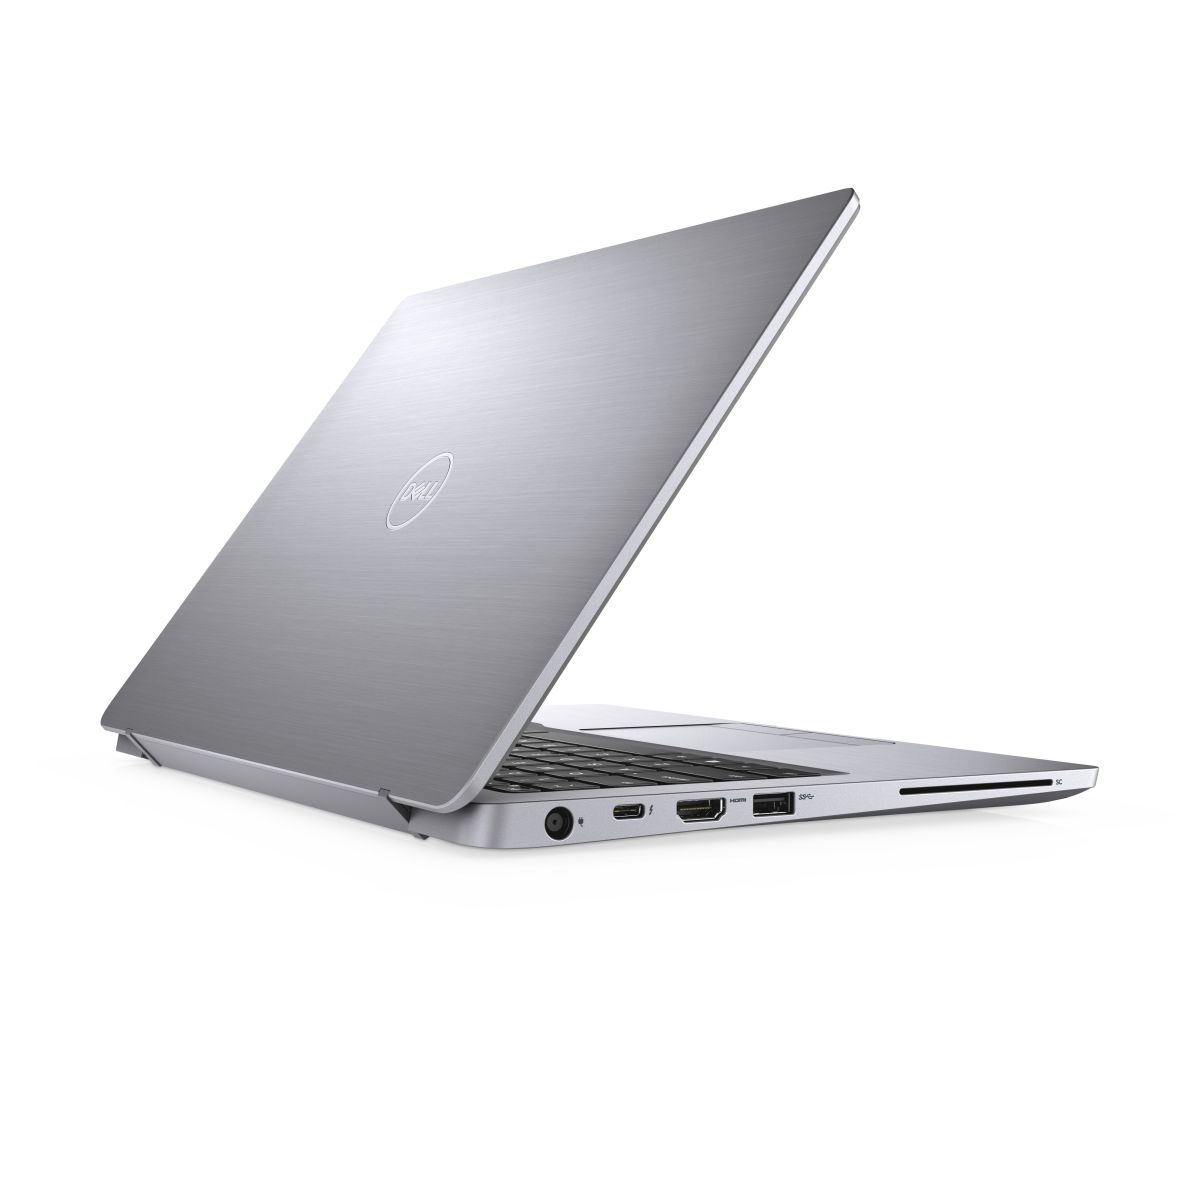 DELL Latitude 7300 - K3WG6 laptop specifications